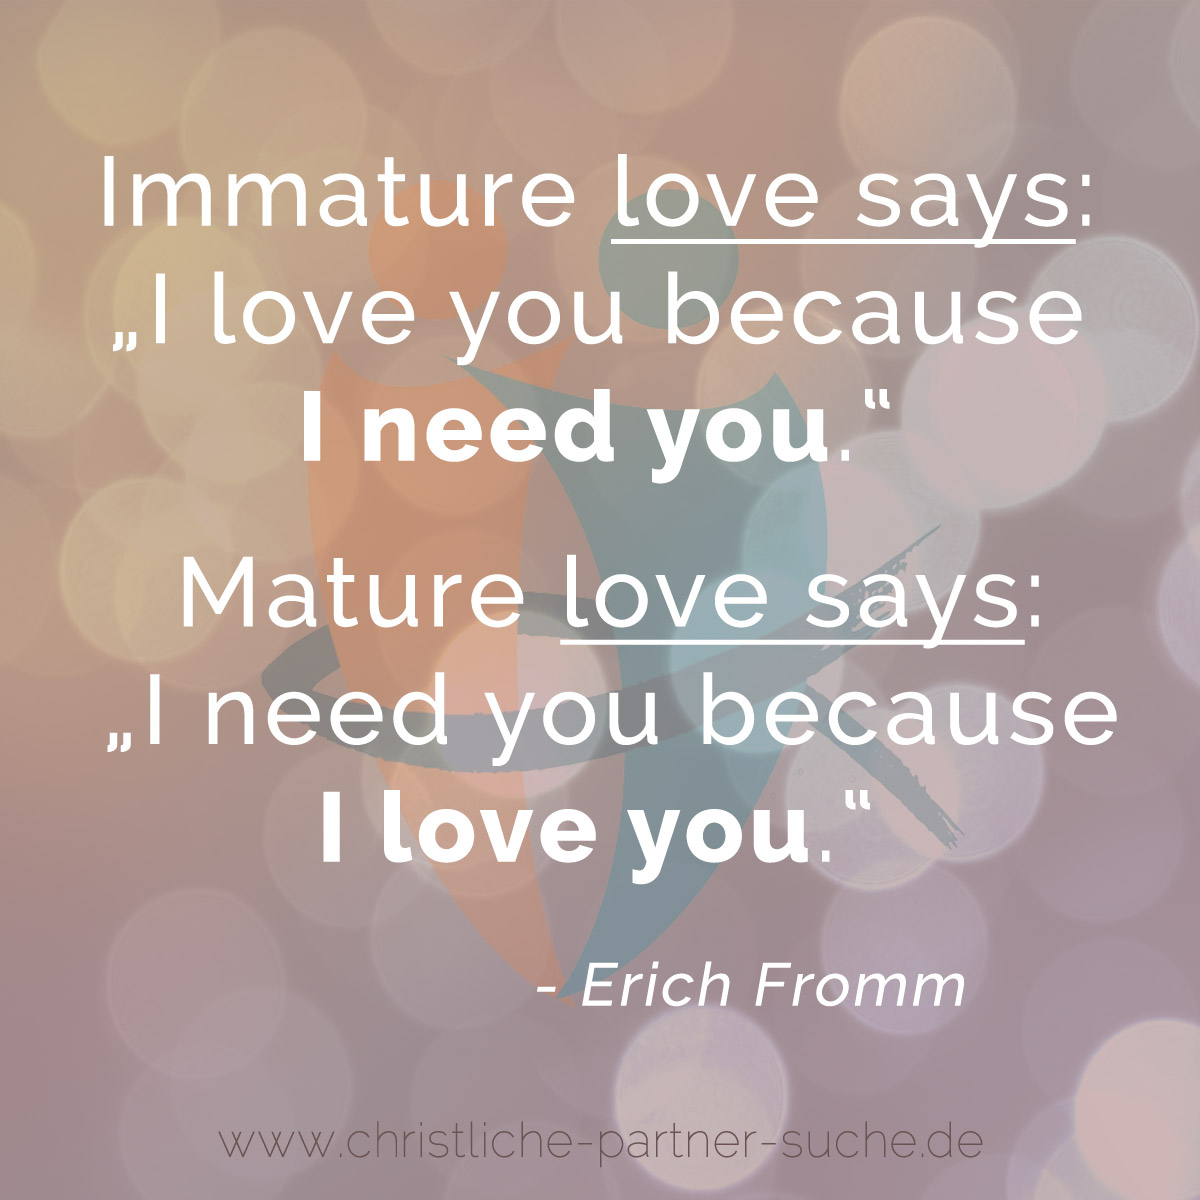 Immature love says: I love you